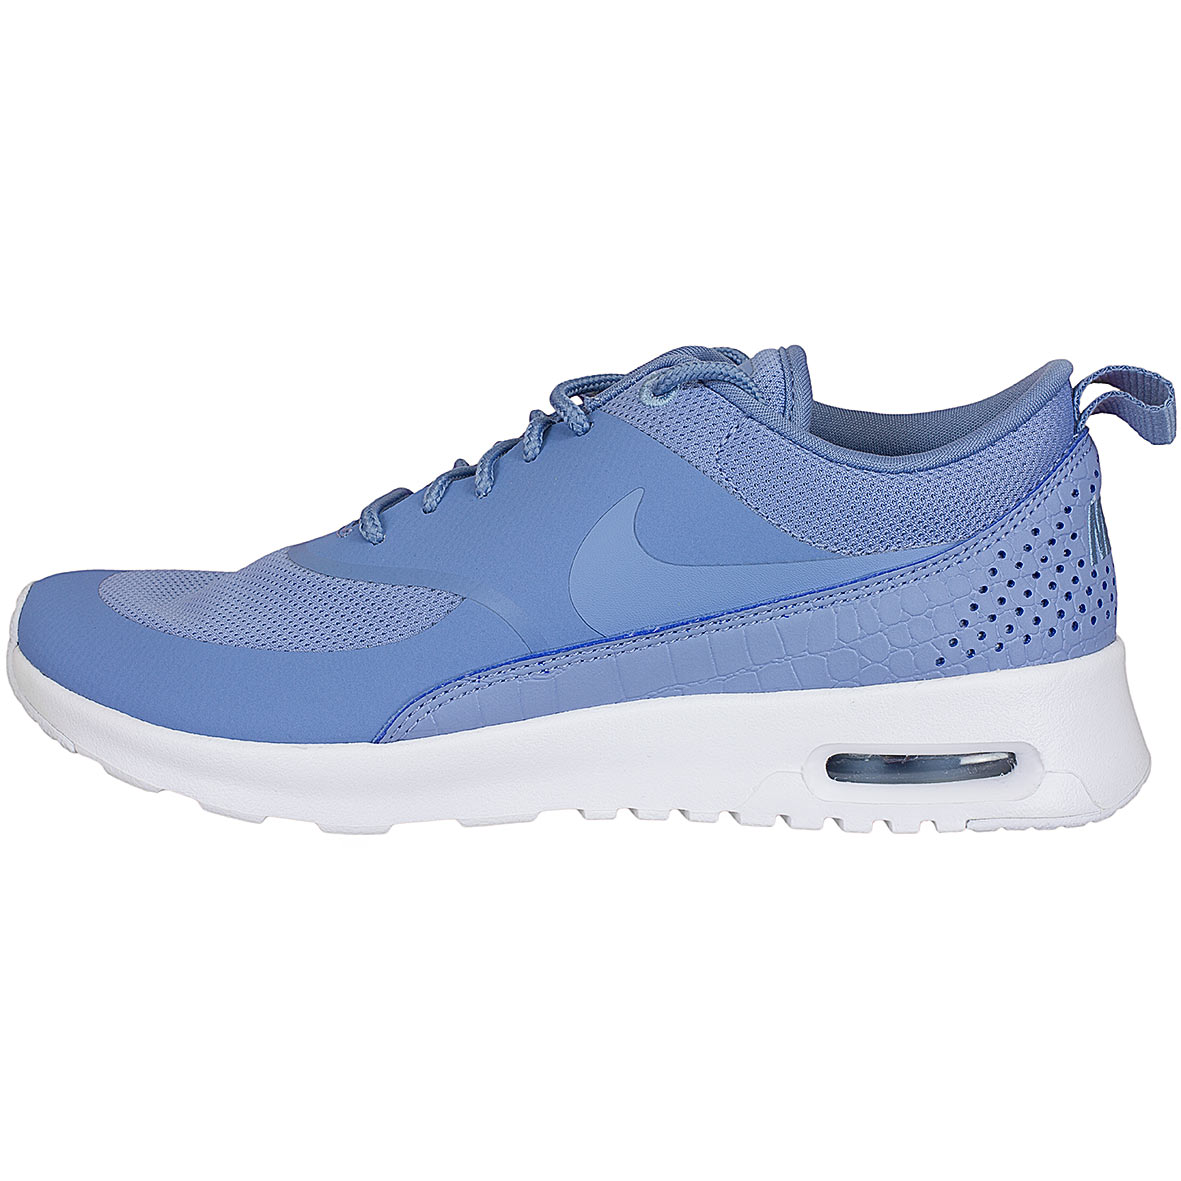 Nike Damen Sneaker Air Max blau - hier bestellen!